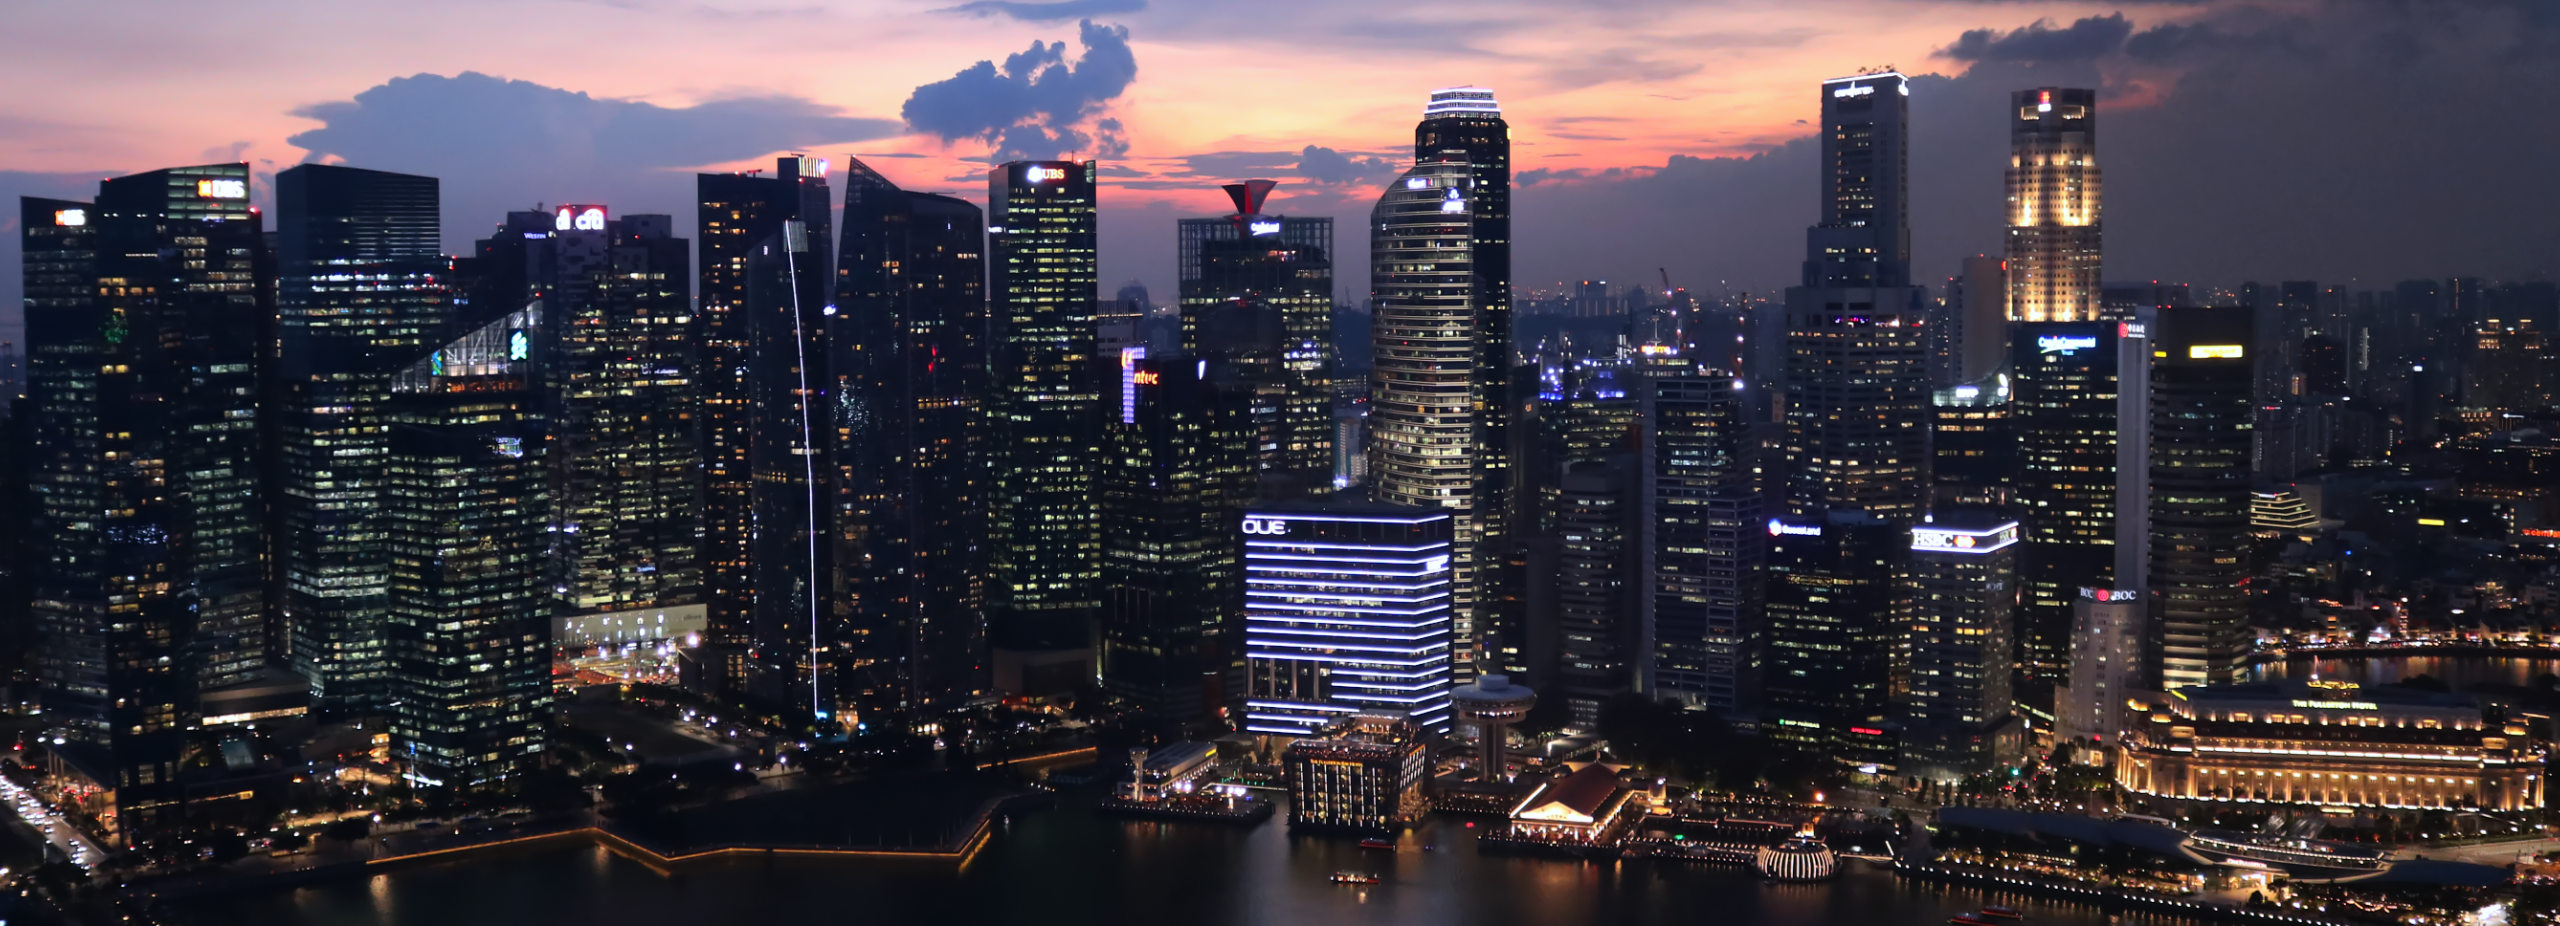 Singapore's Lights